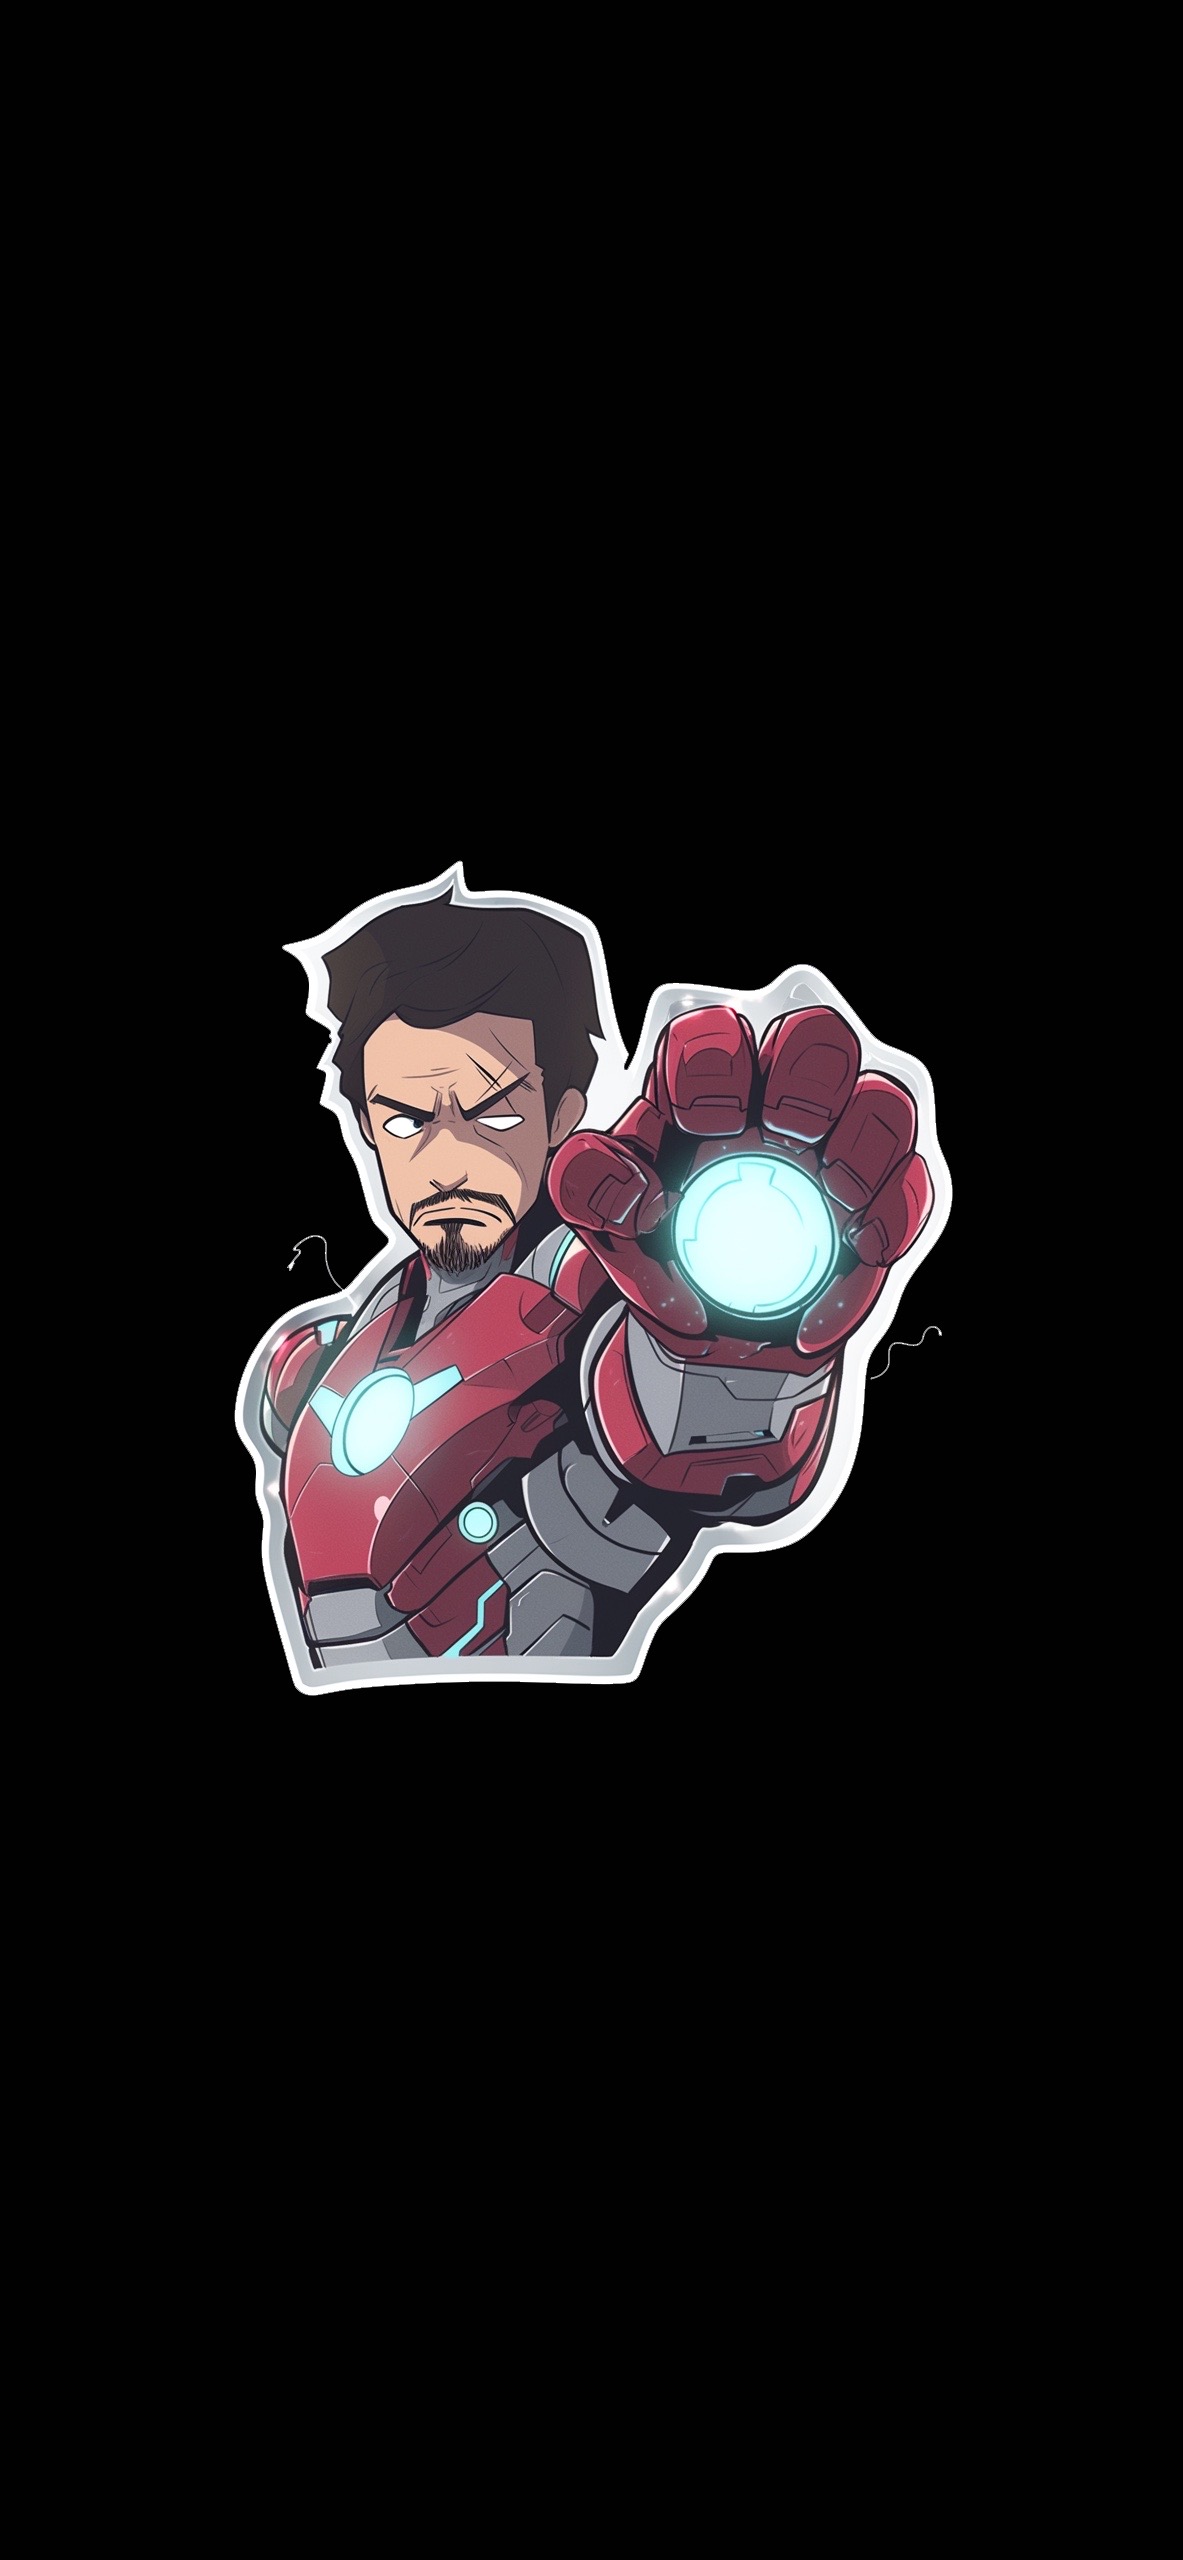 America's ass|| Marvel Gif Series - Tony Stark - Wattpad